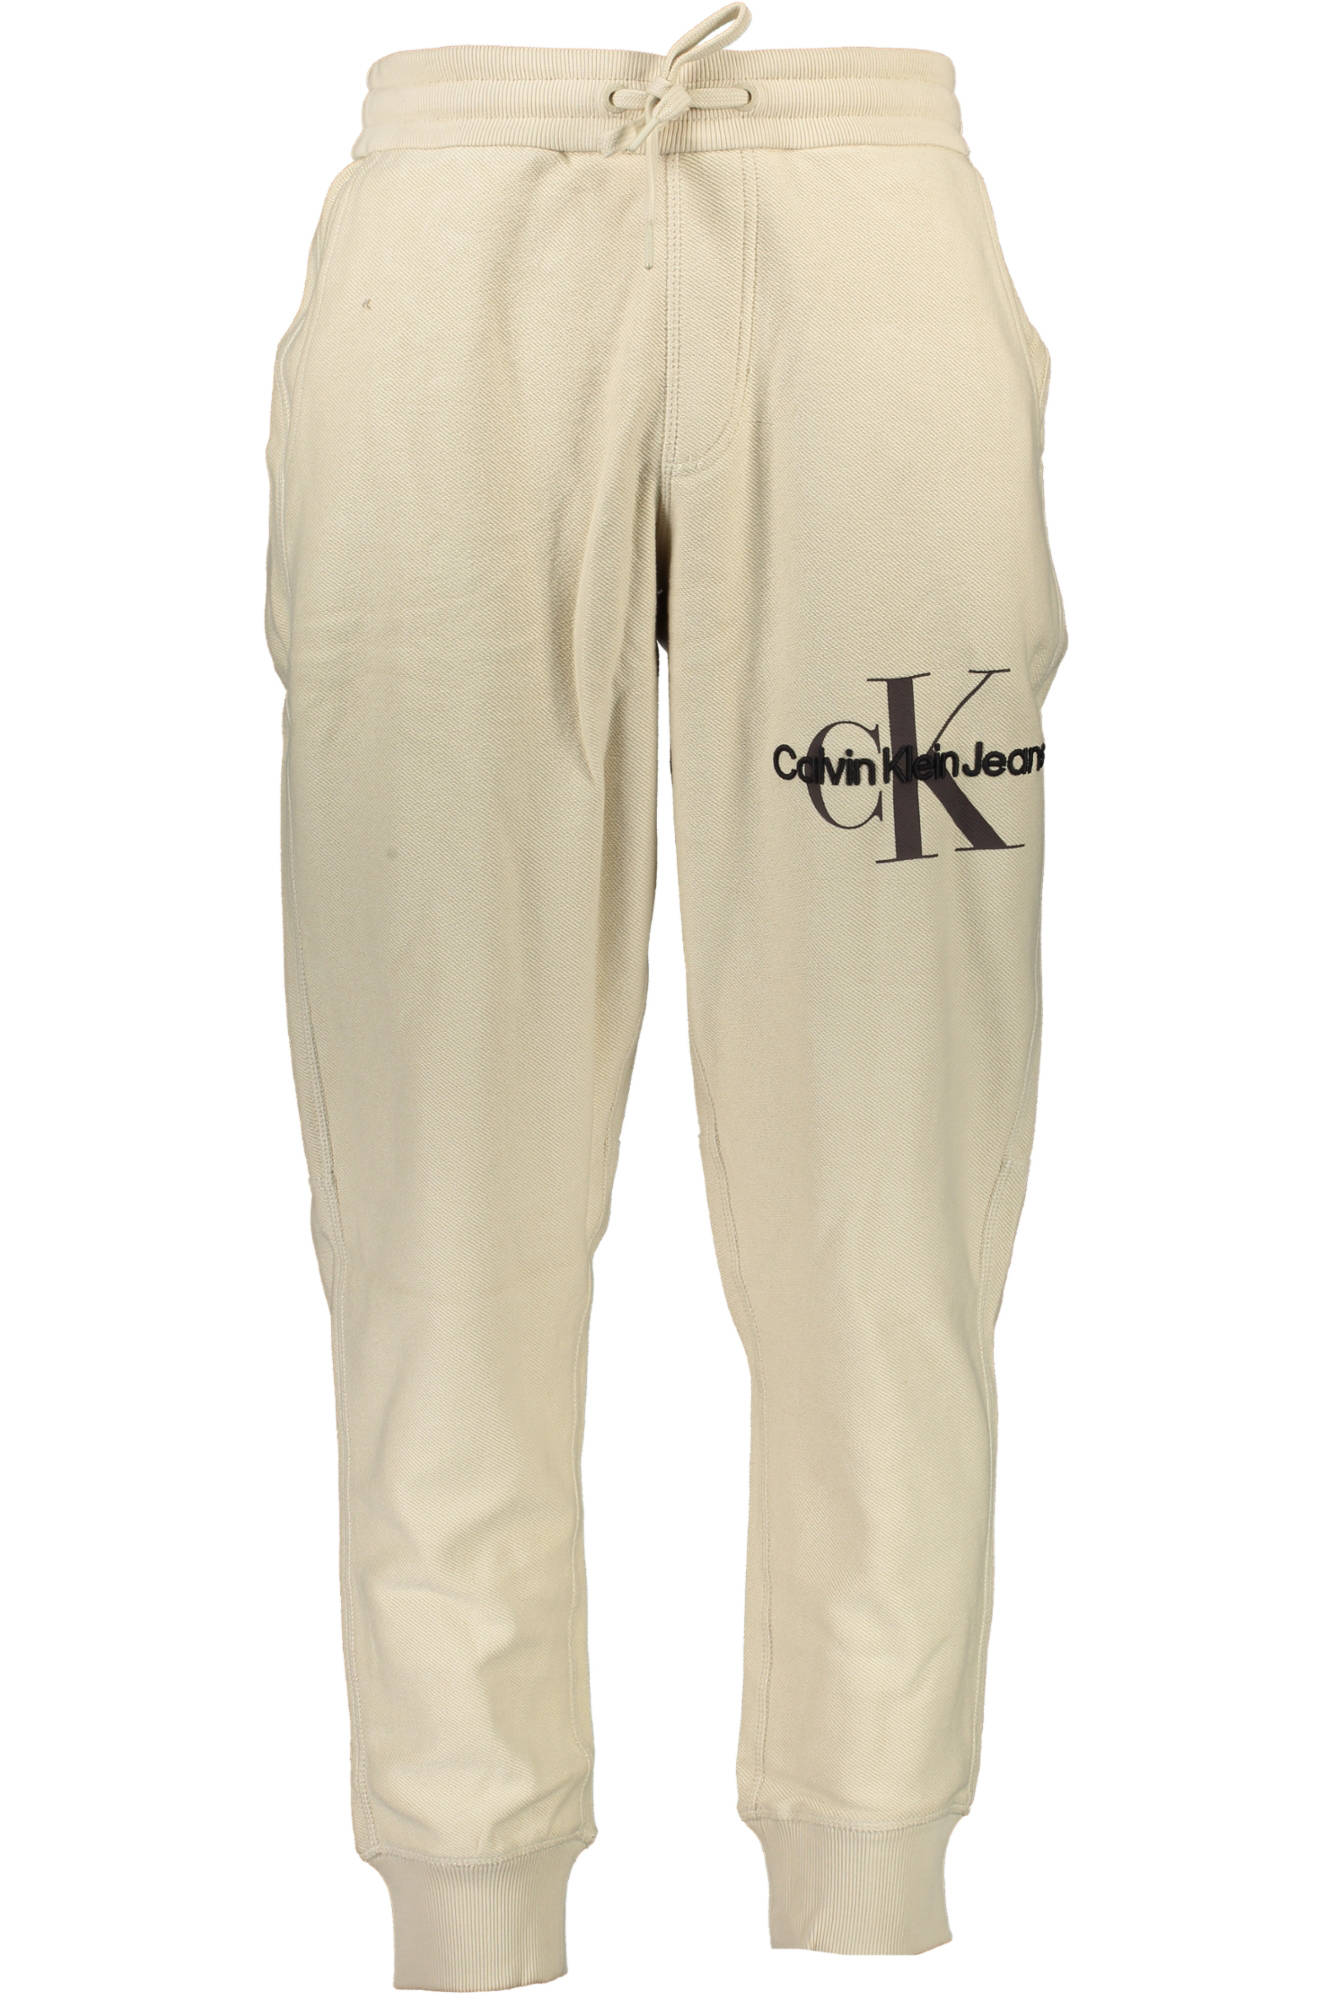 Calvin Klein Pants in Kenya for sale  Prices on Jijicoke